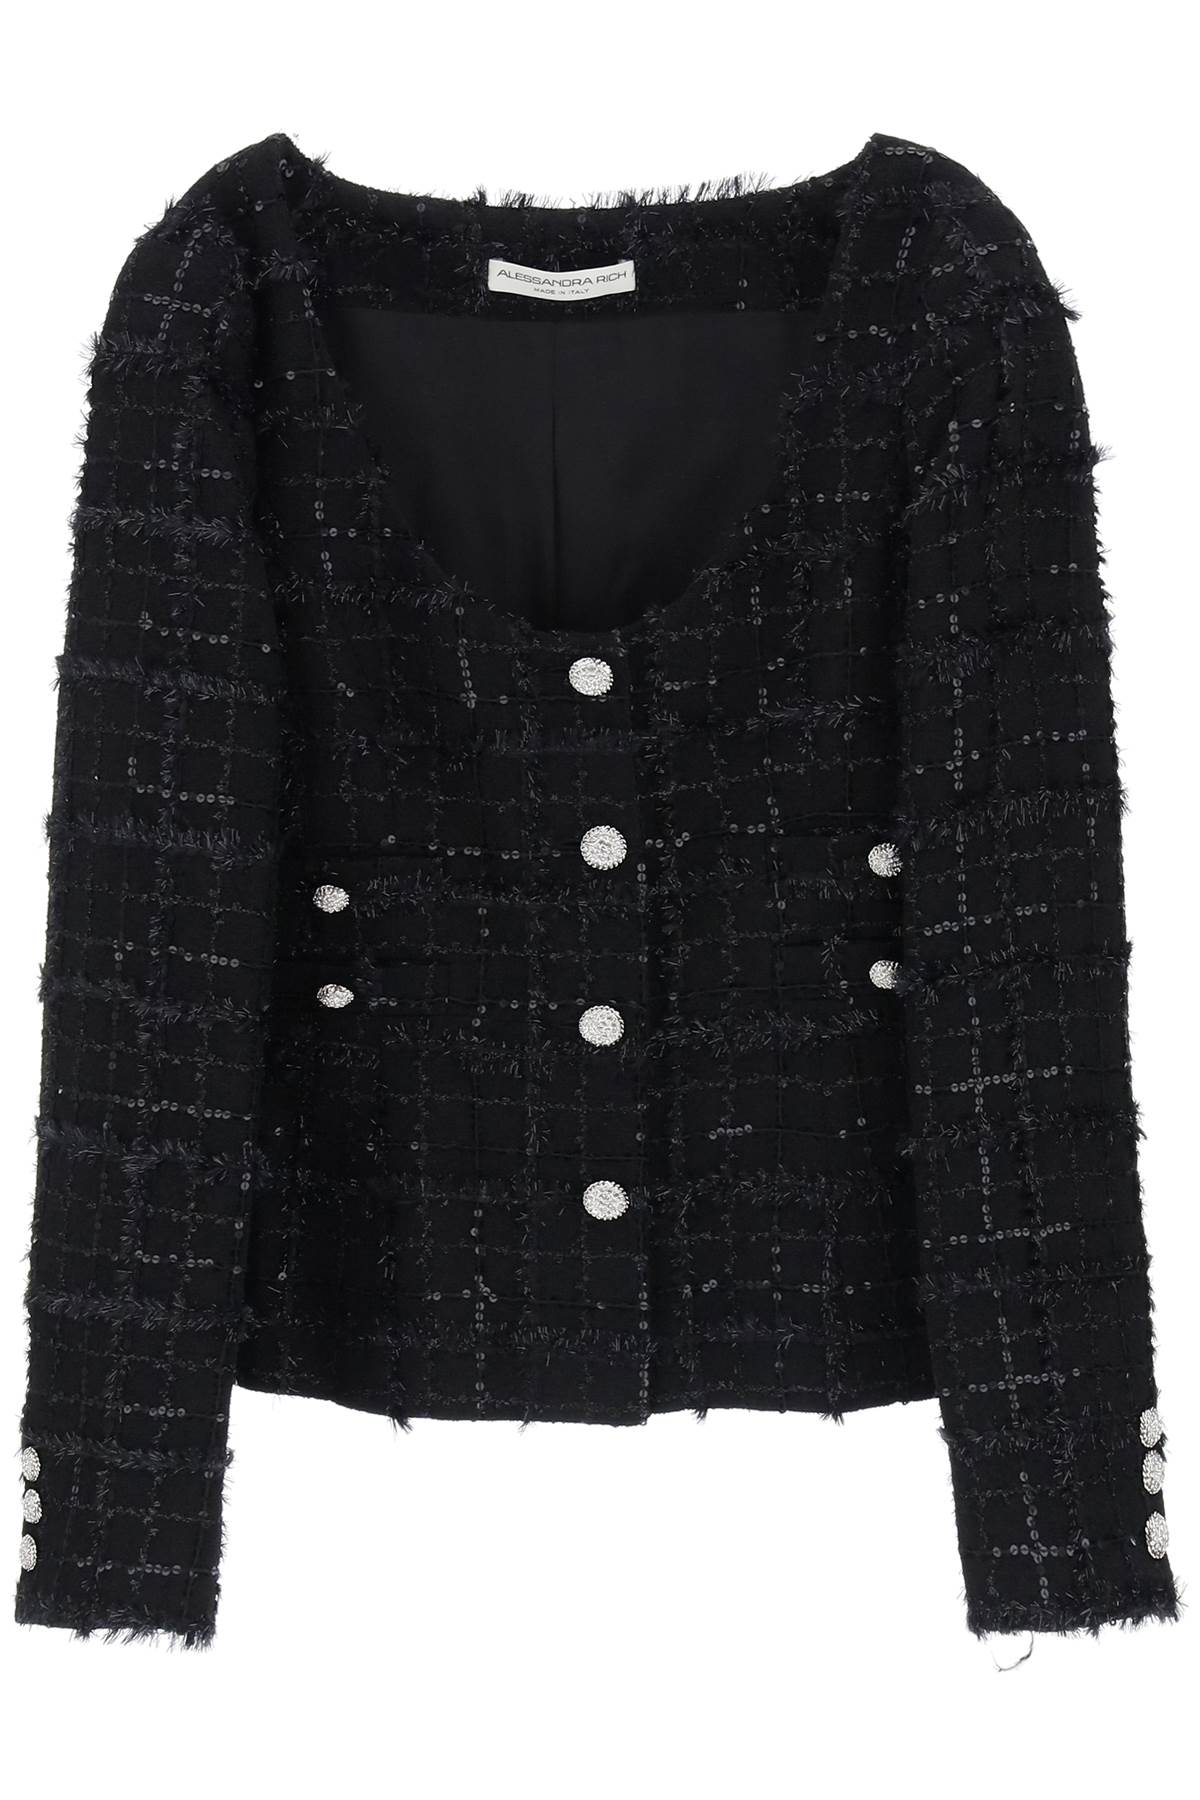 Tweed Jacket With Sequins Embell